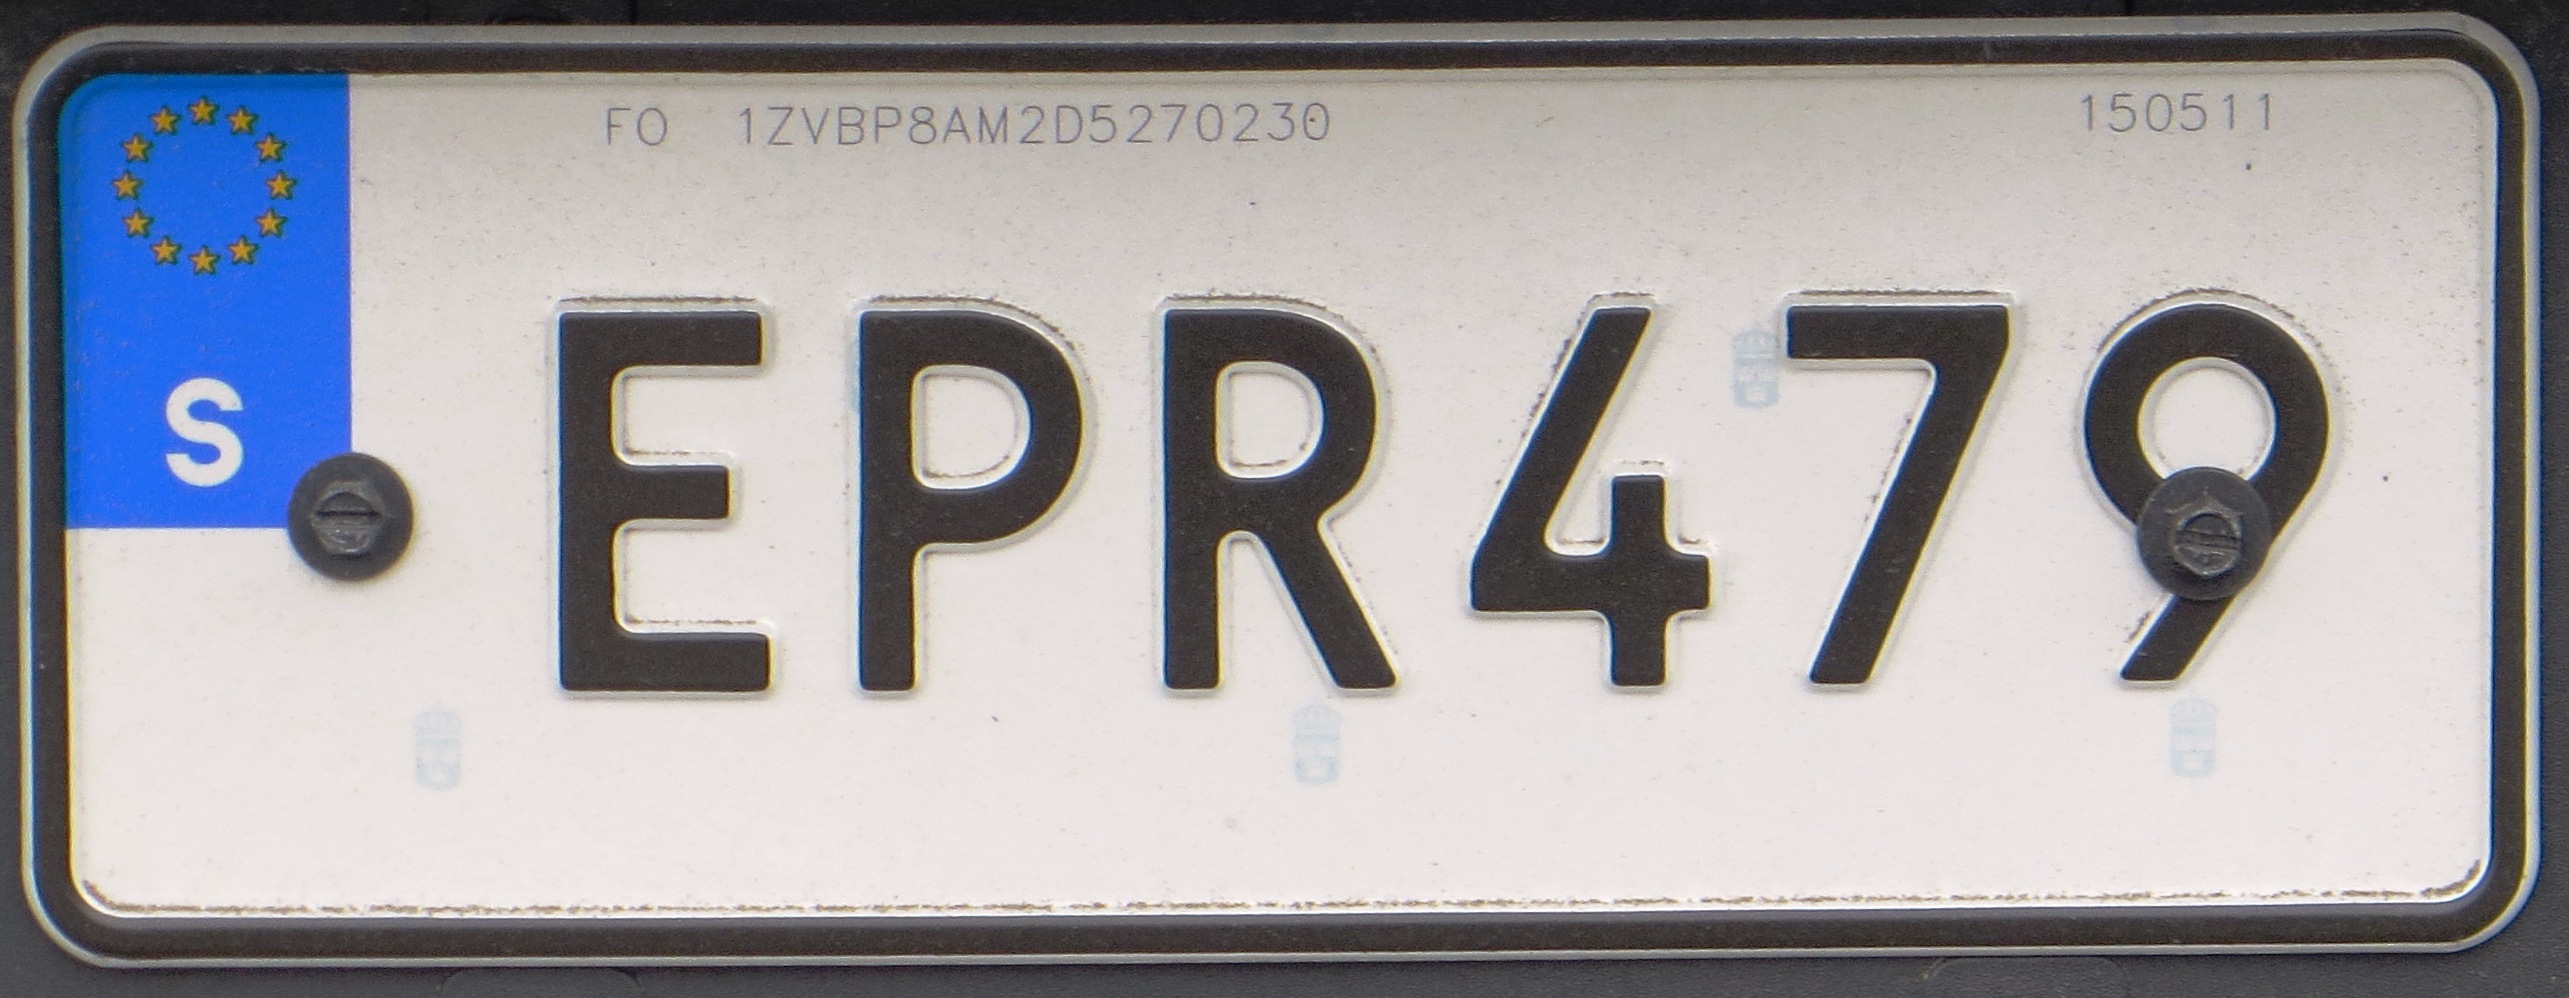 File:Sweden license plate.jpg - Wikimedia Commons